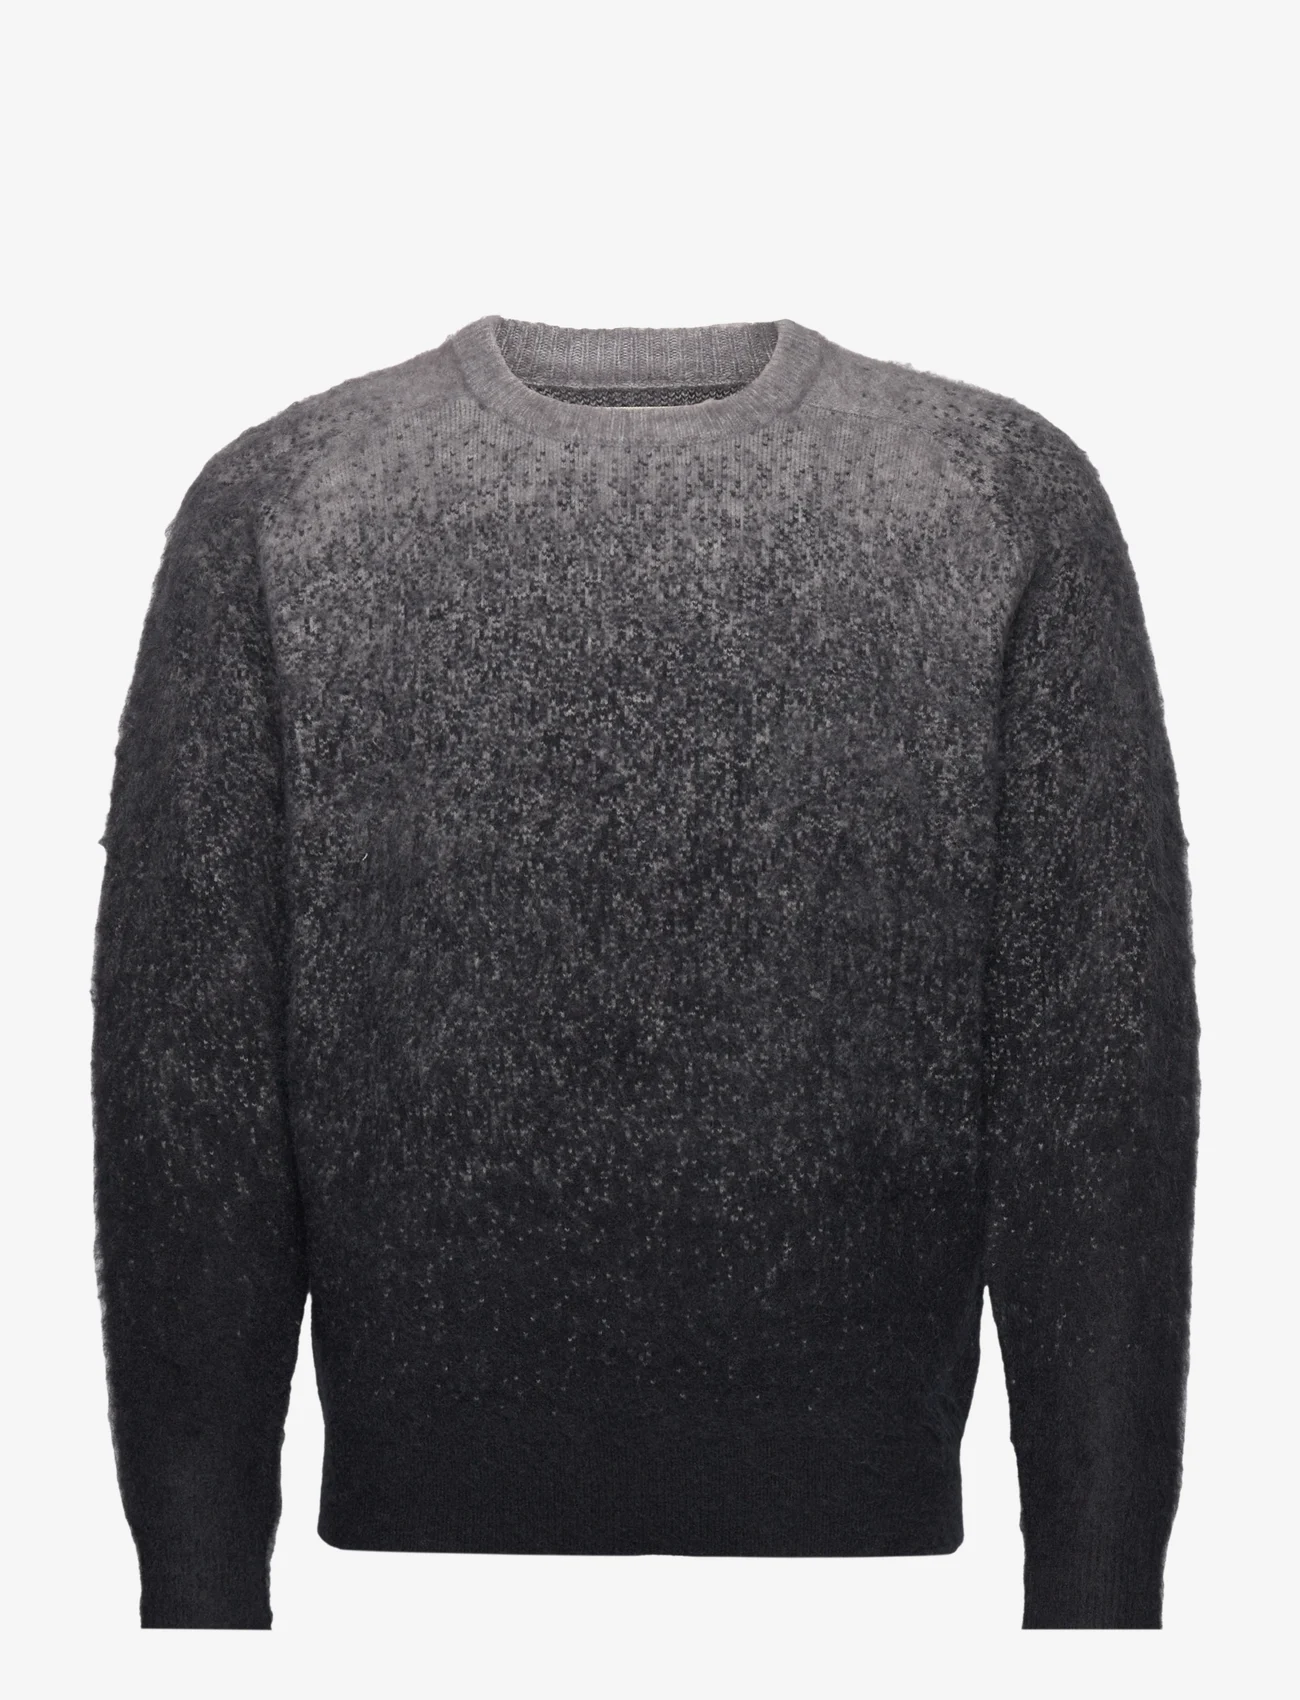 Taikan - Gradient Knit Sweater-Black - stickade basplagg - black - 0